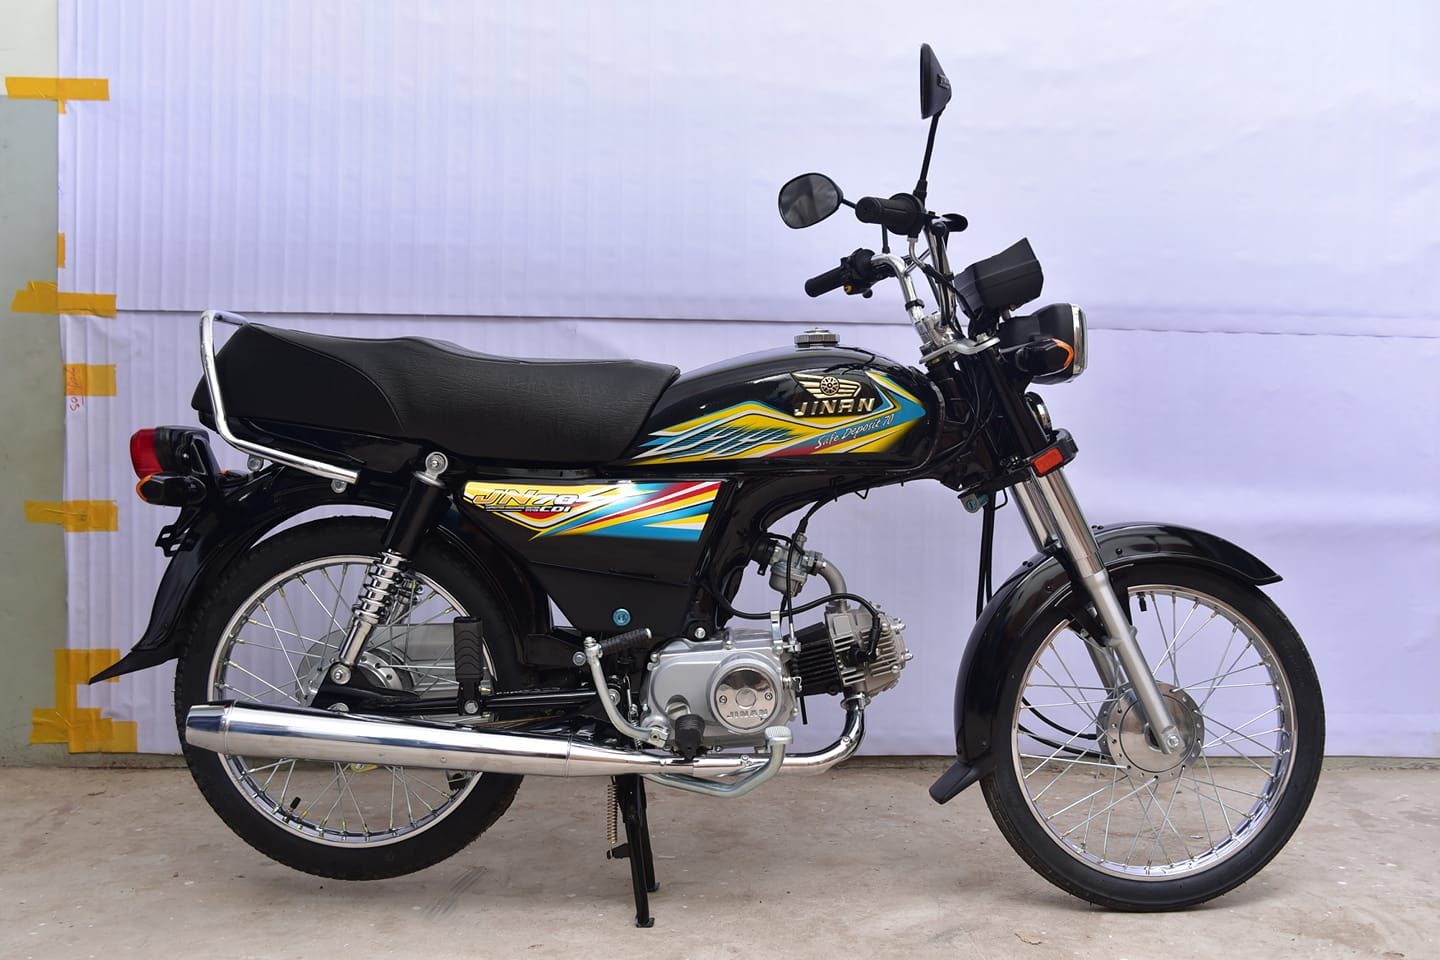 Jinan Bike 70cc Price In Pakistan 2021, New Model Specs, Color, Mileage